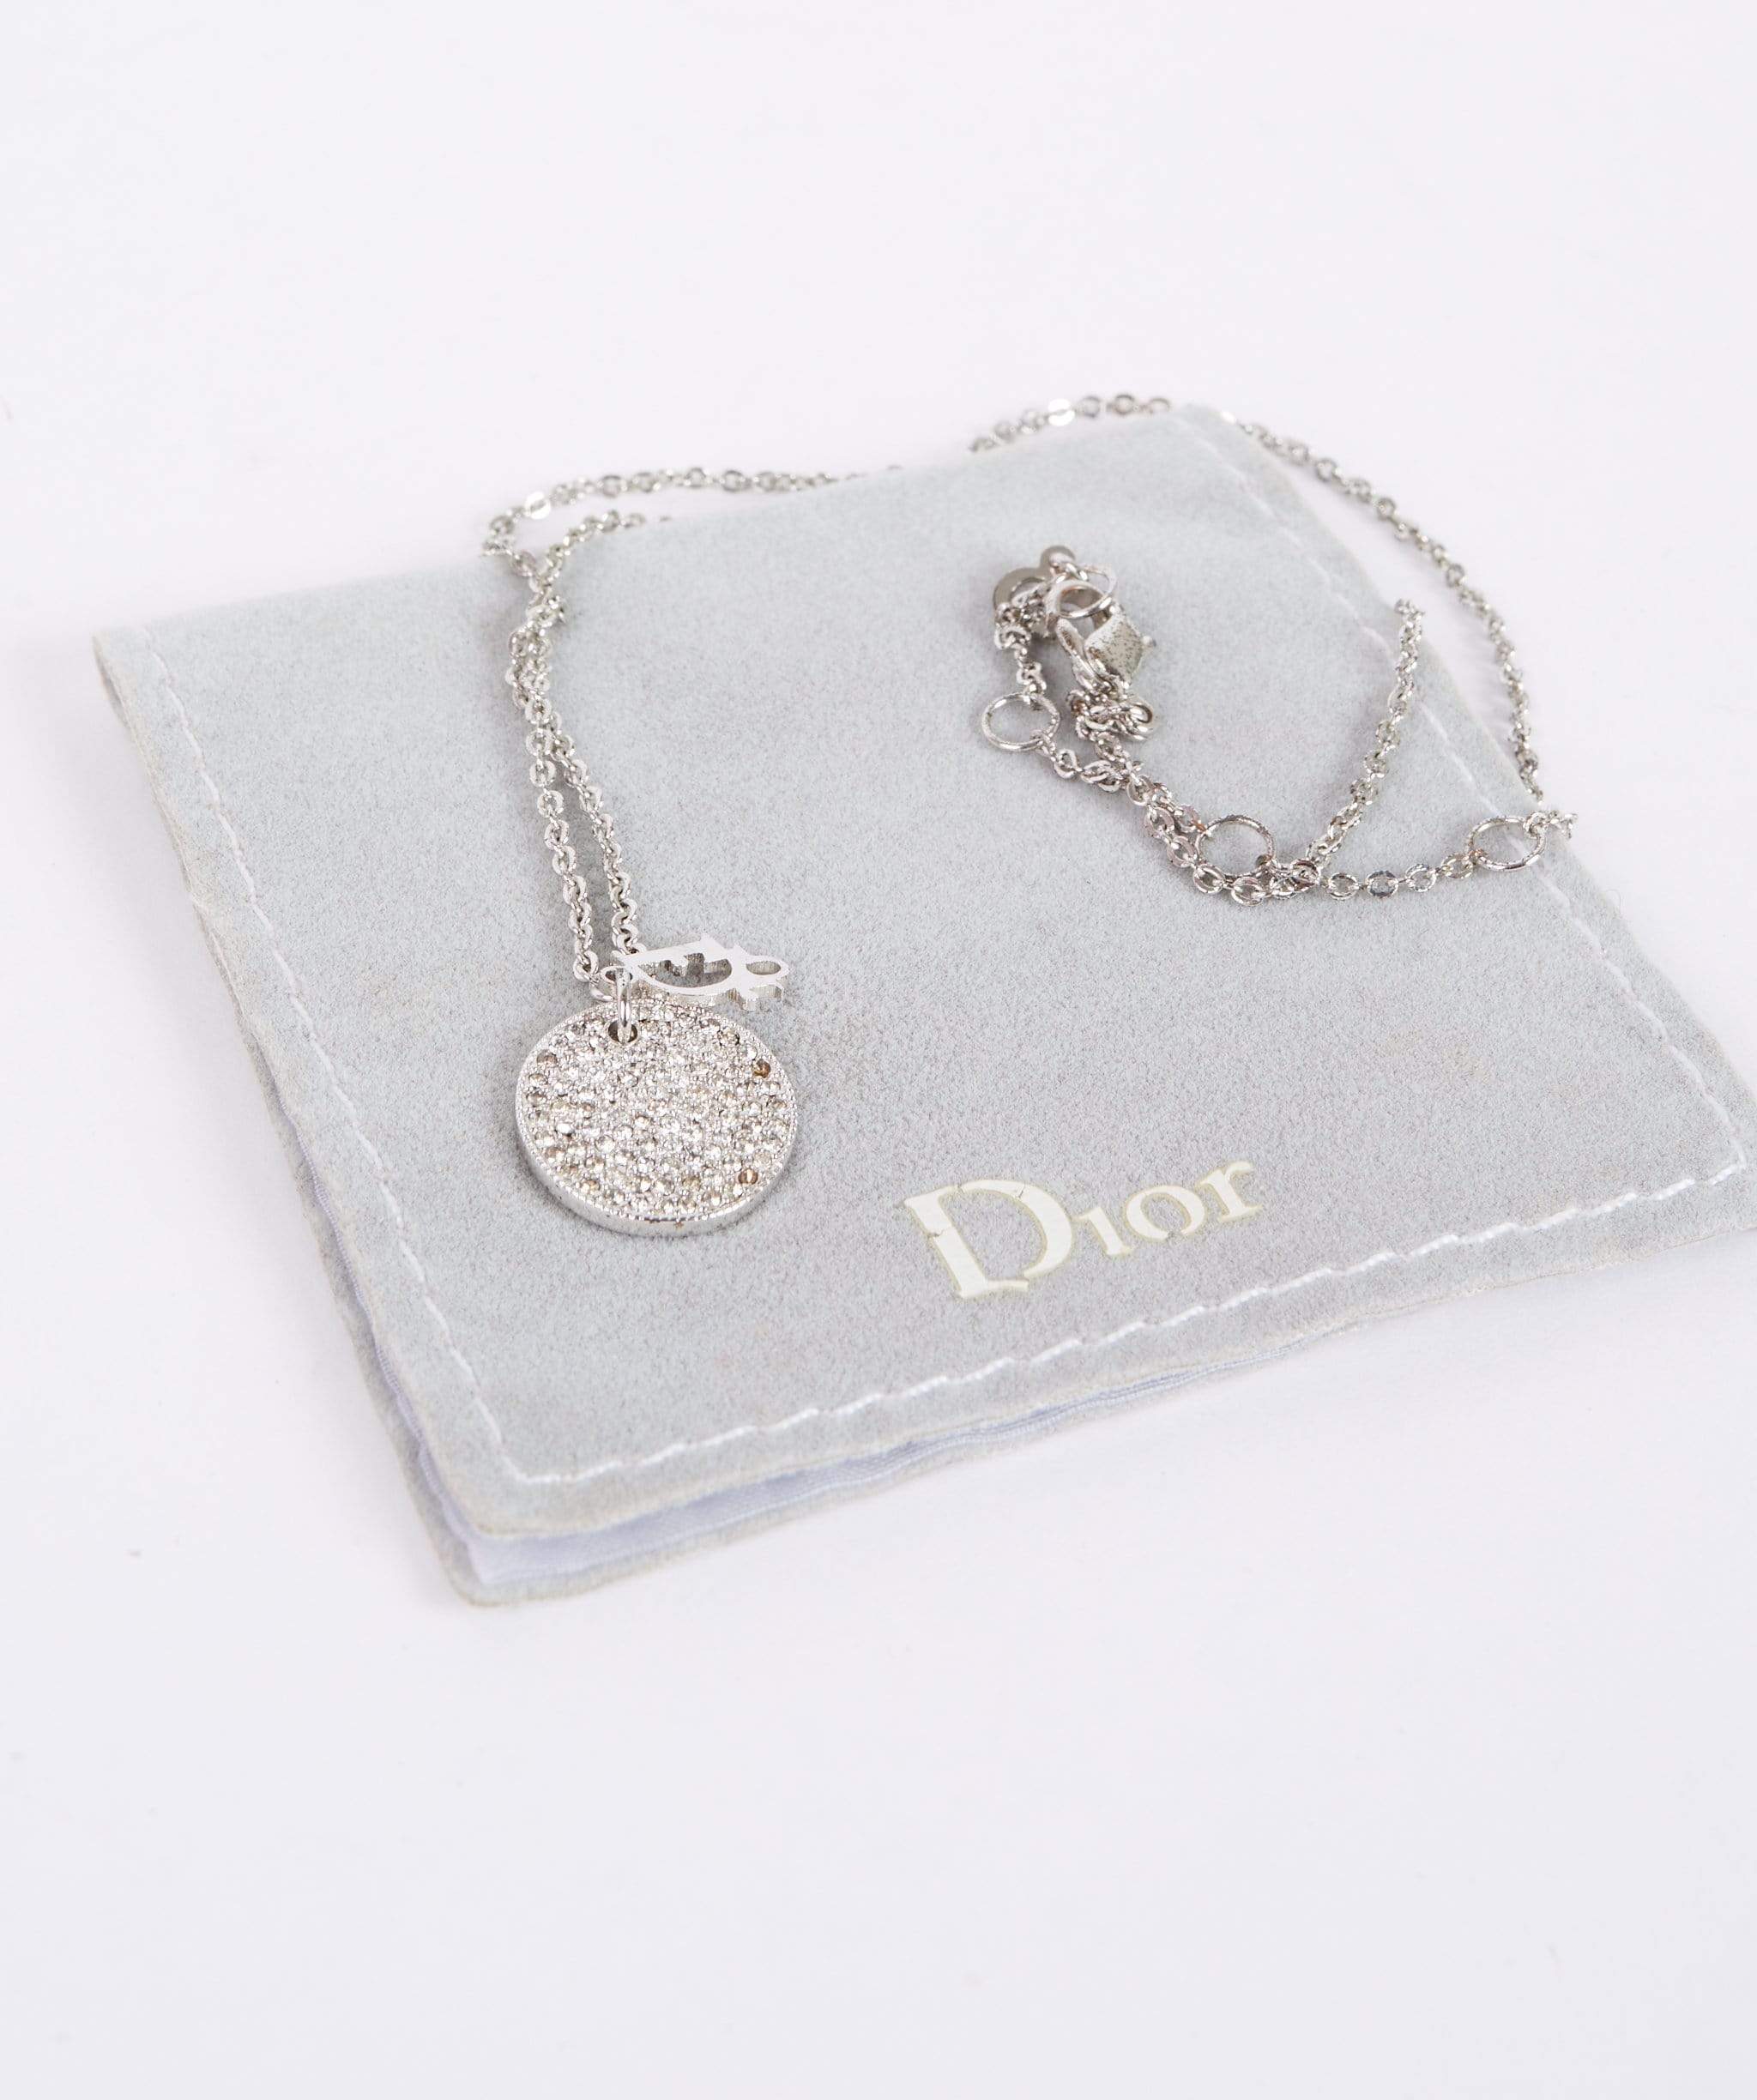 Christian Dior Christian Dior necklace